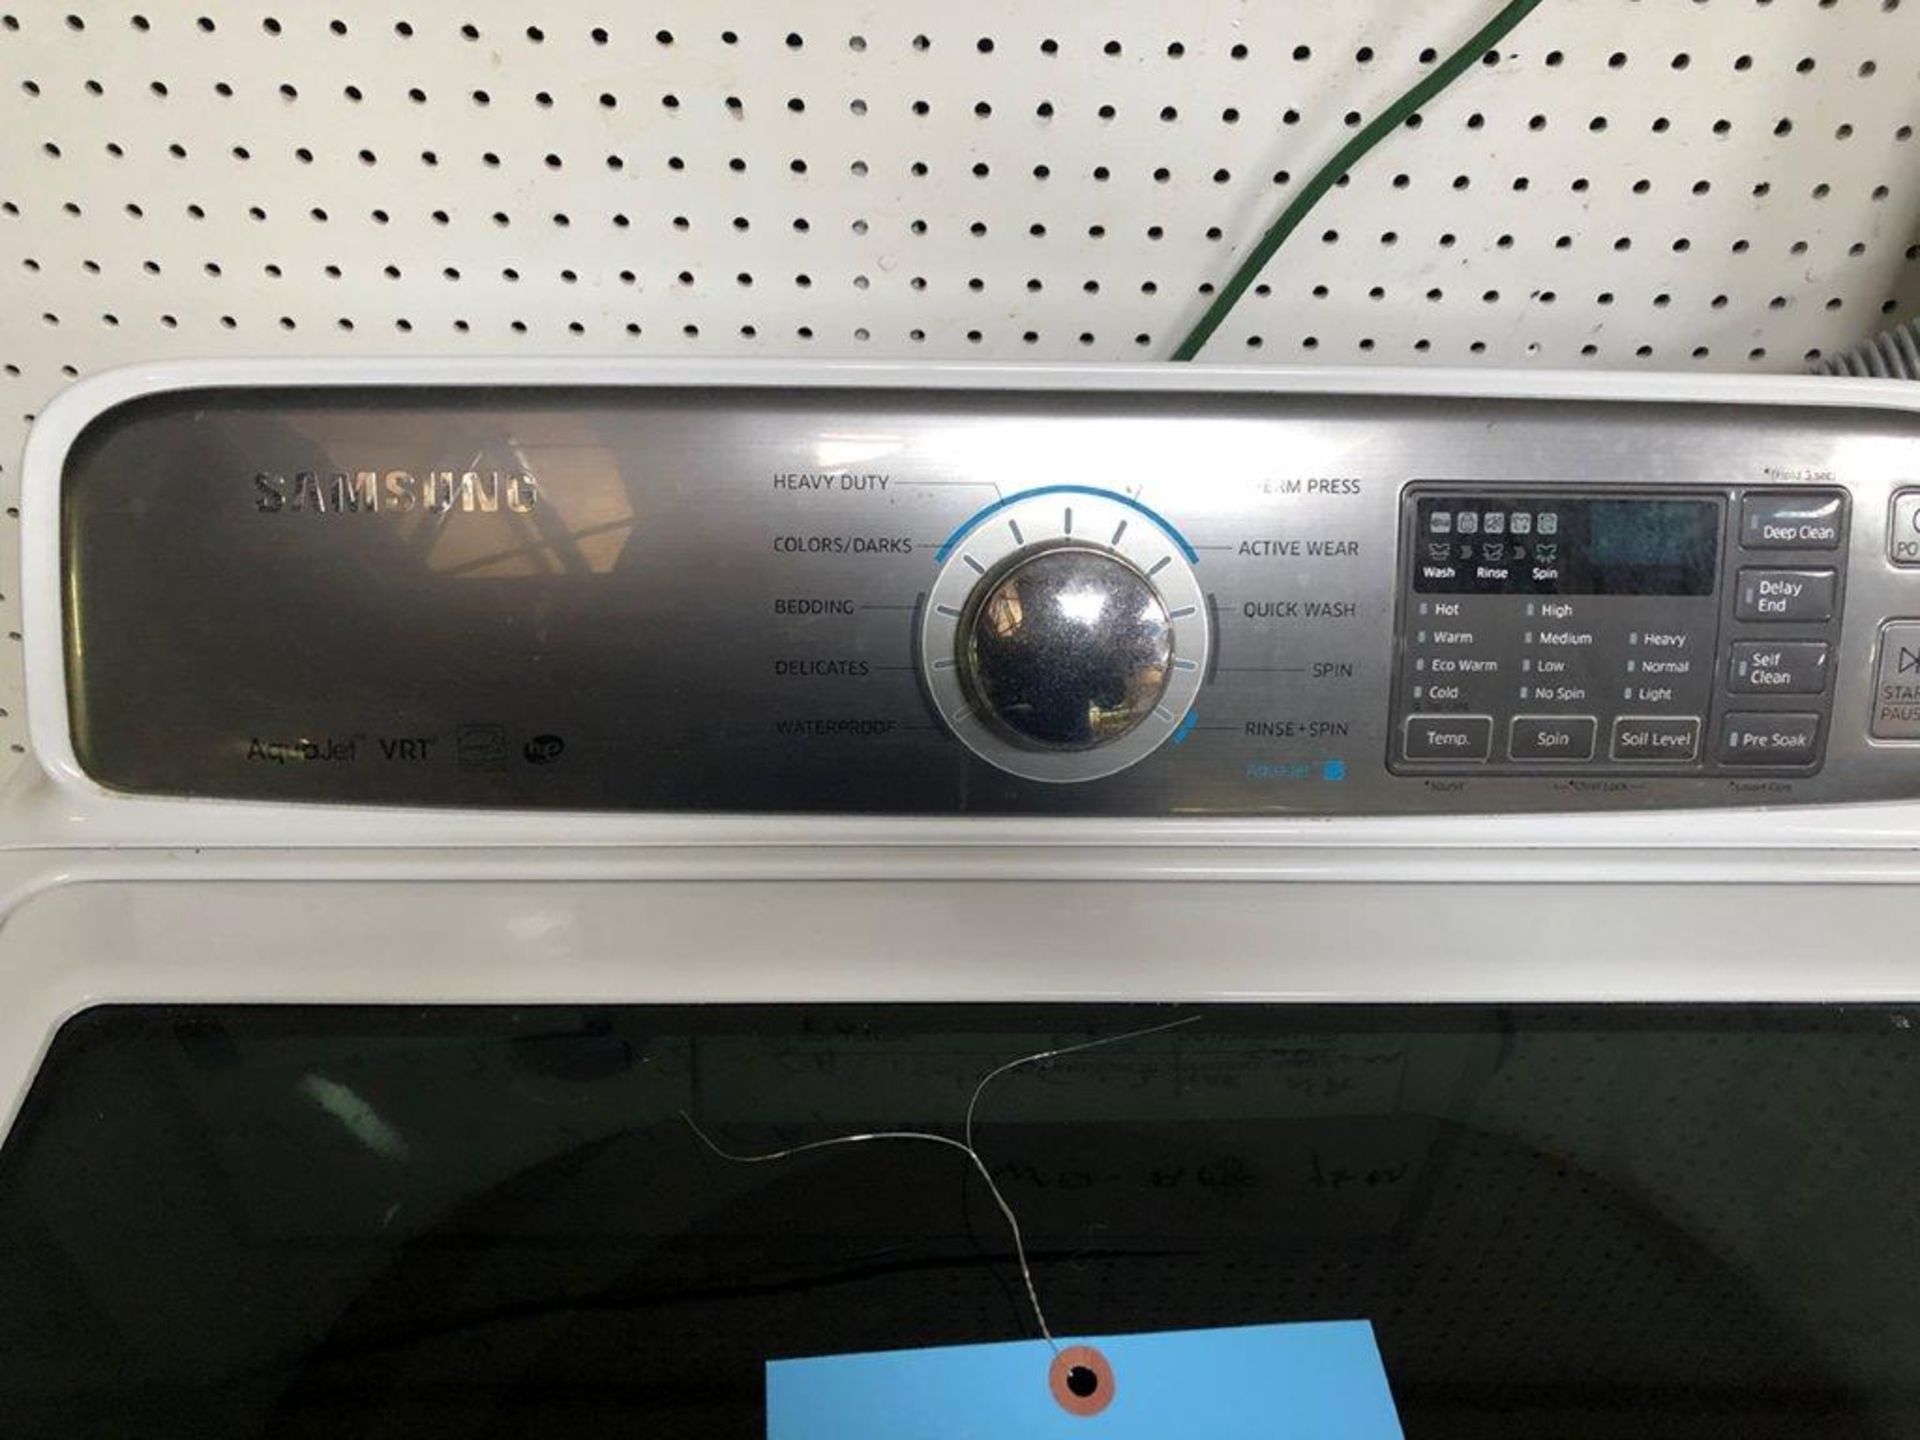 Top Load Samsung High Efficency Washing Machine - Image 2 of 5